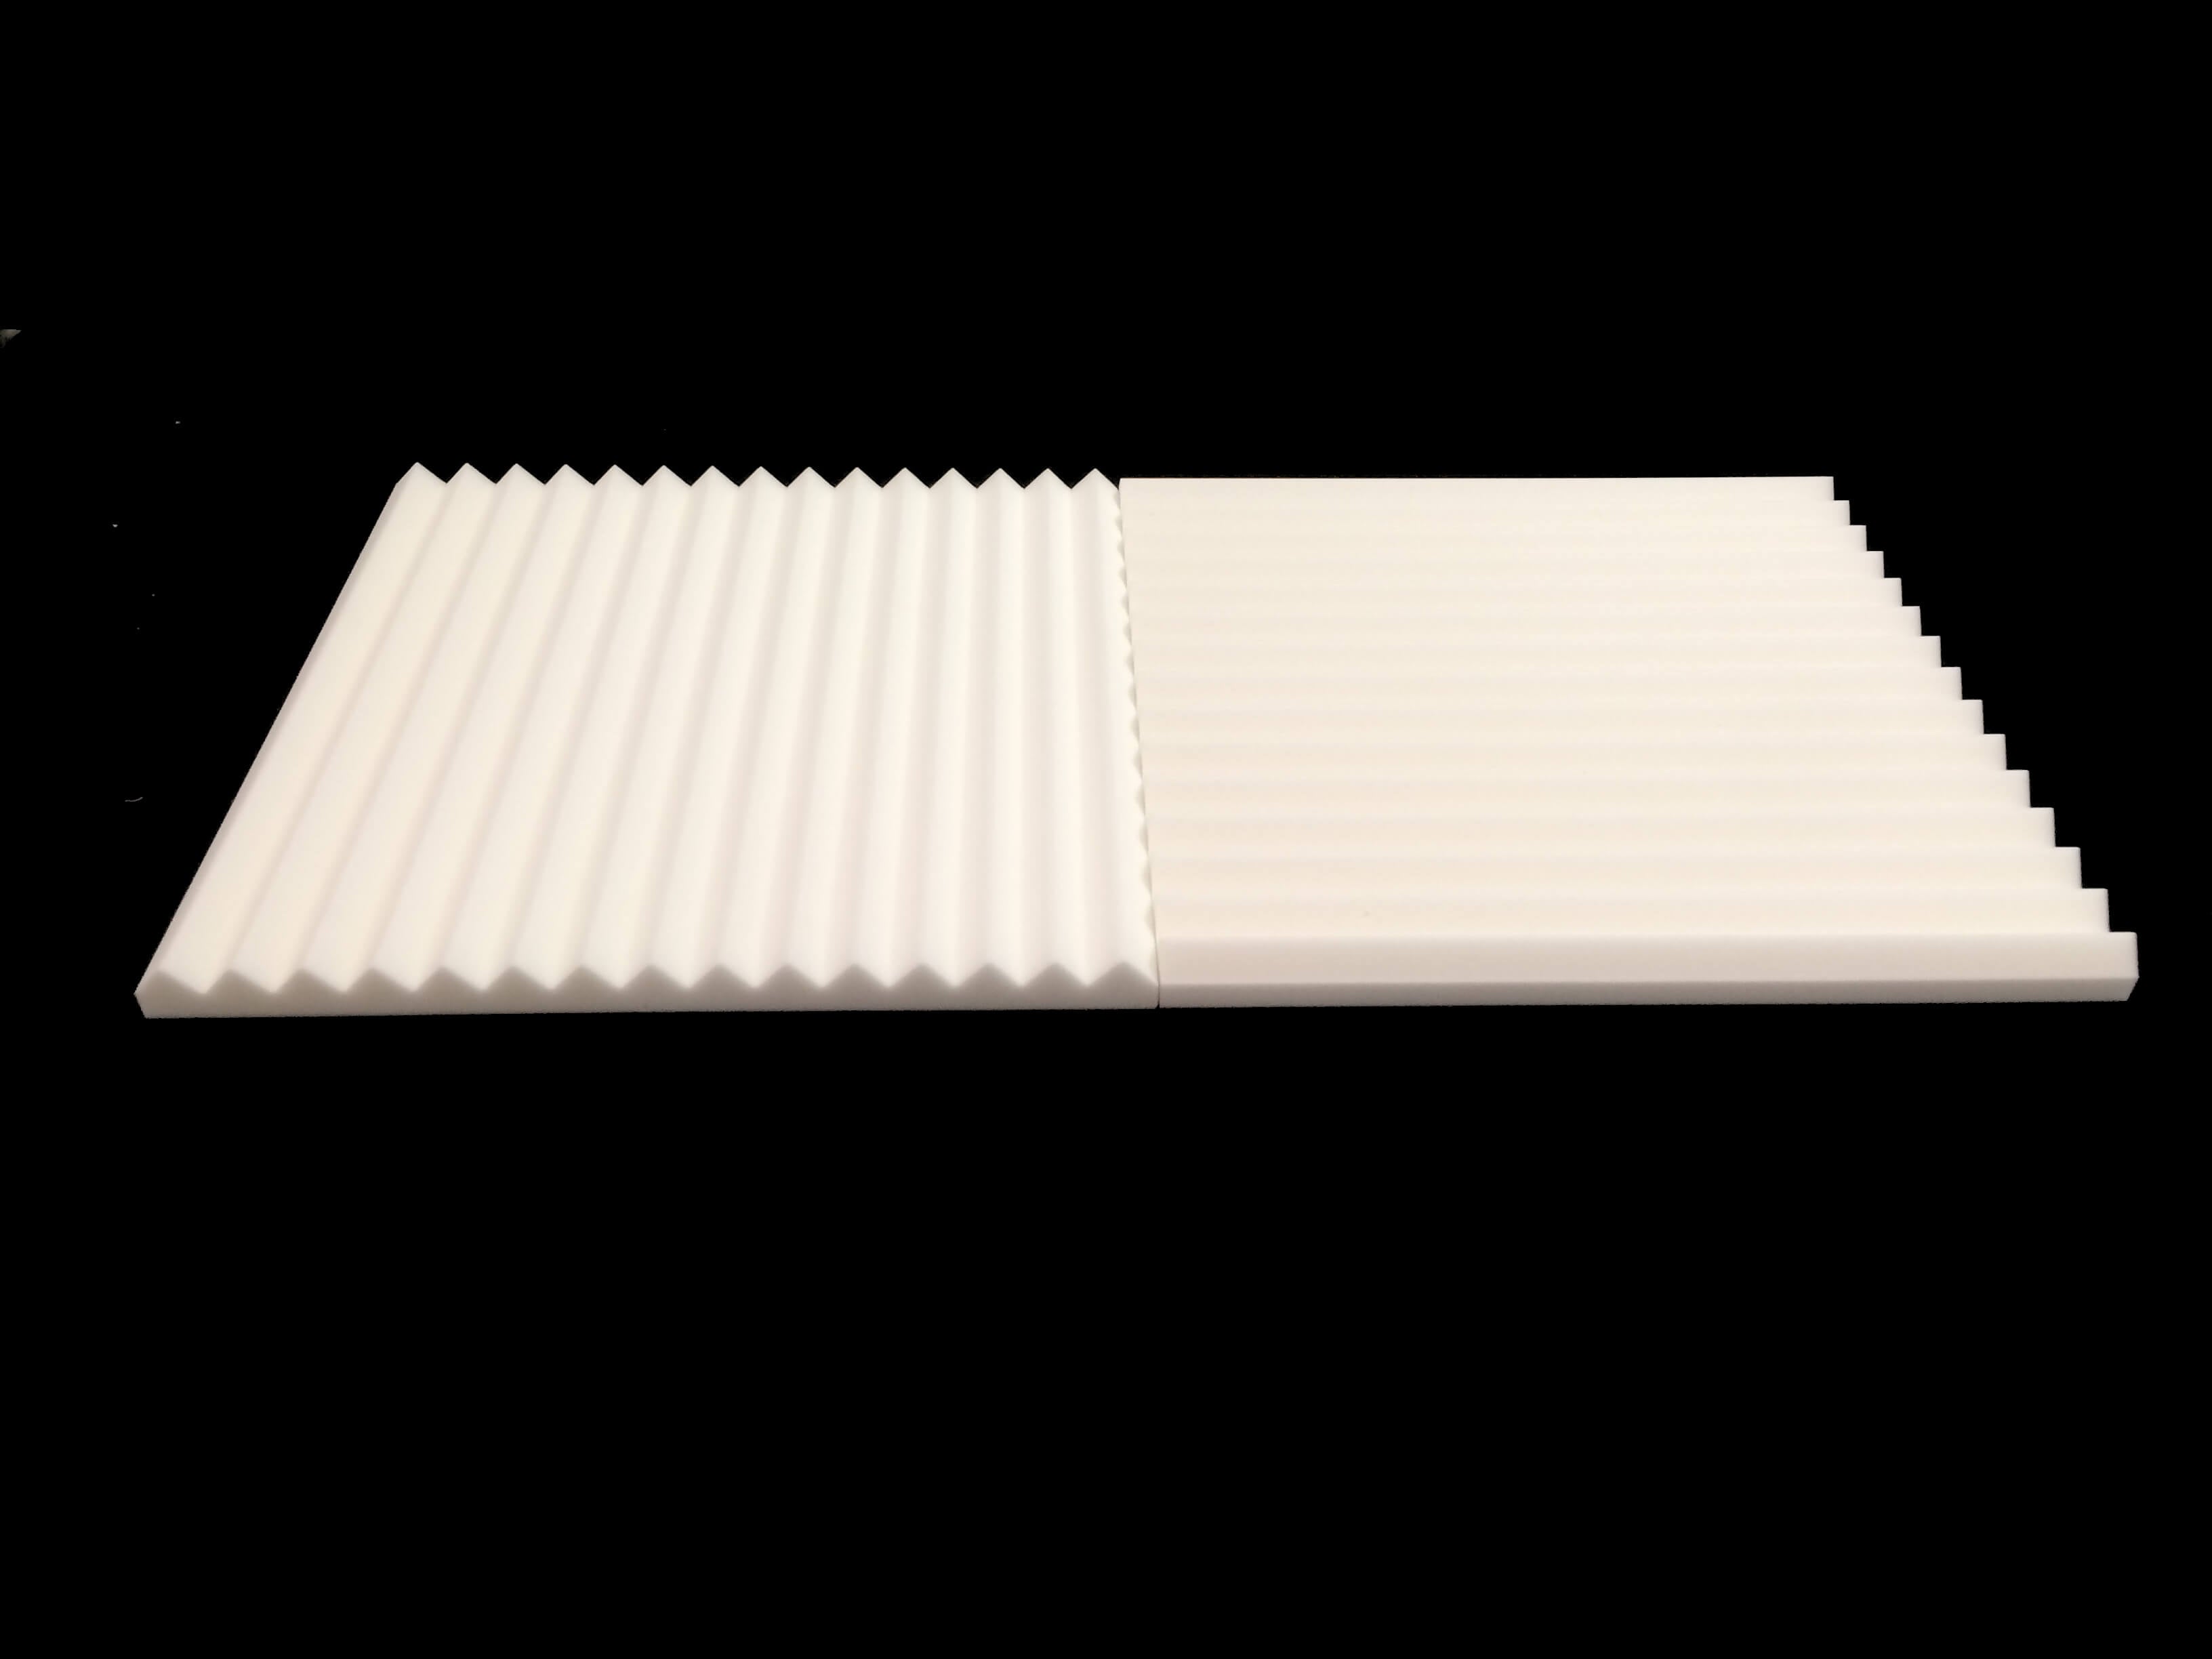 Mel-Acoustic Wedge 40mm White Melamine Acoustic Foam Panel 600x600 Pack Of 10